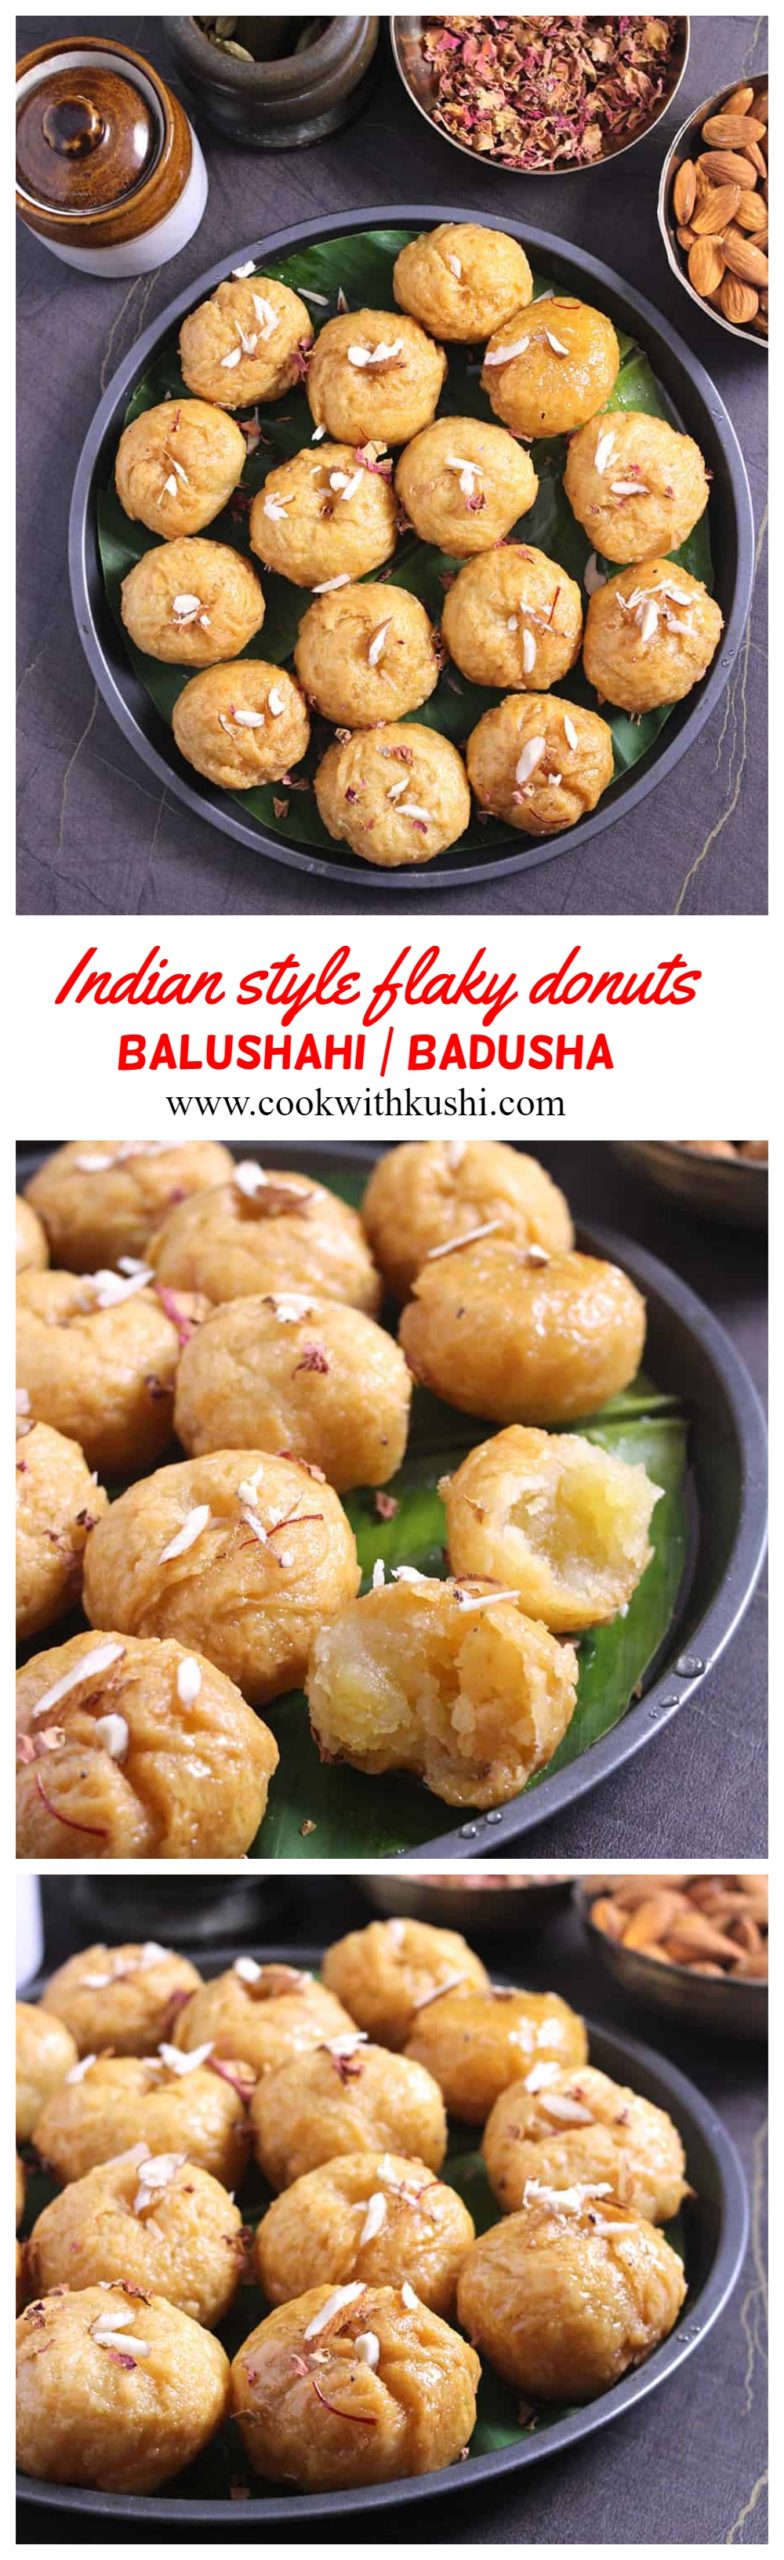 This balushahi recipe gives you the perfect halwai-style badusha sweet that is crispy on the outside with melt in the mouth, soft and flaky interior. #balushahi #Indiansweet #Indiandessert #diwalisweets #balushah